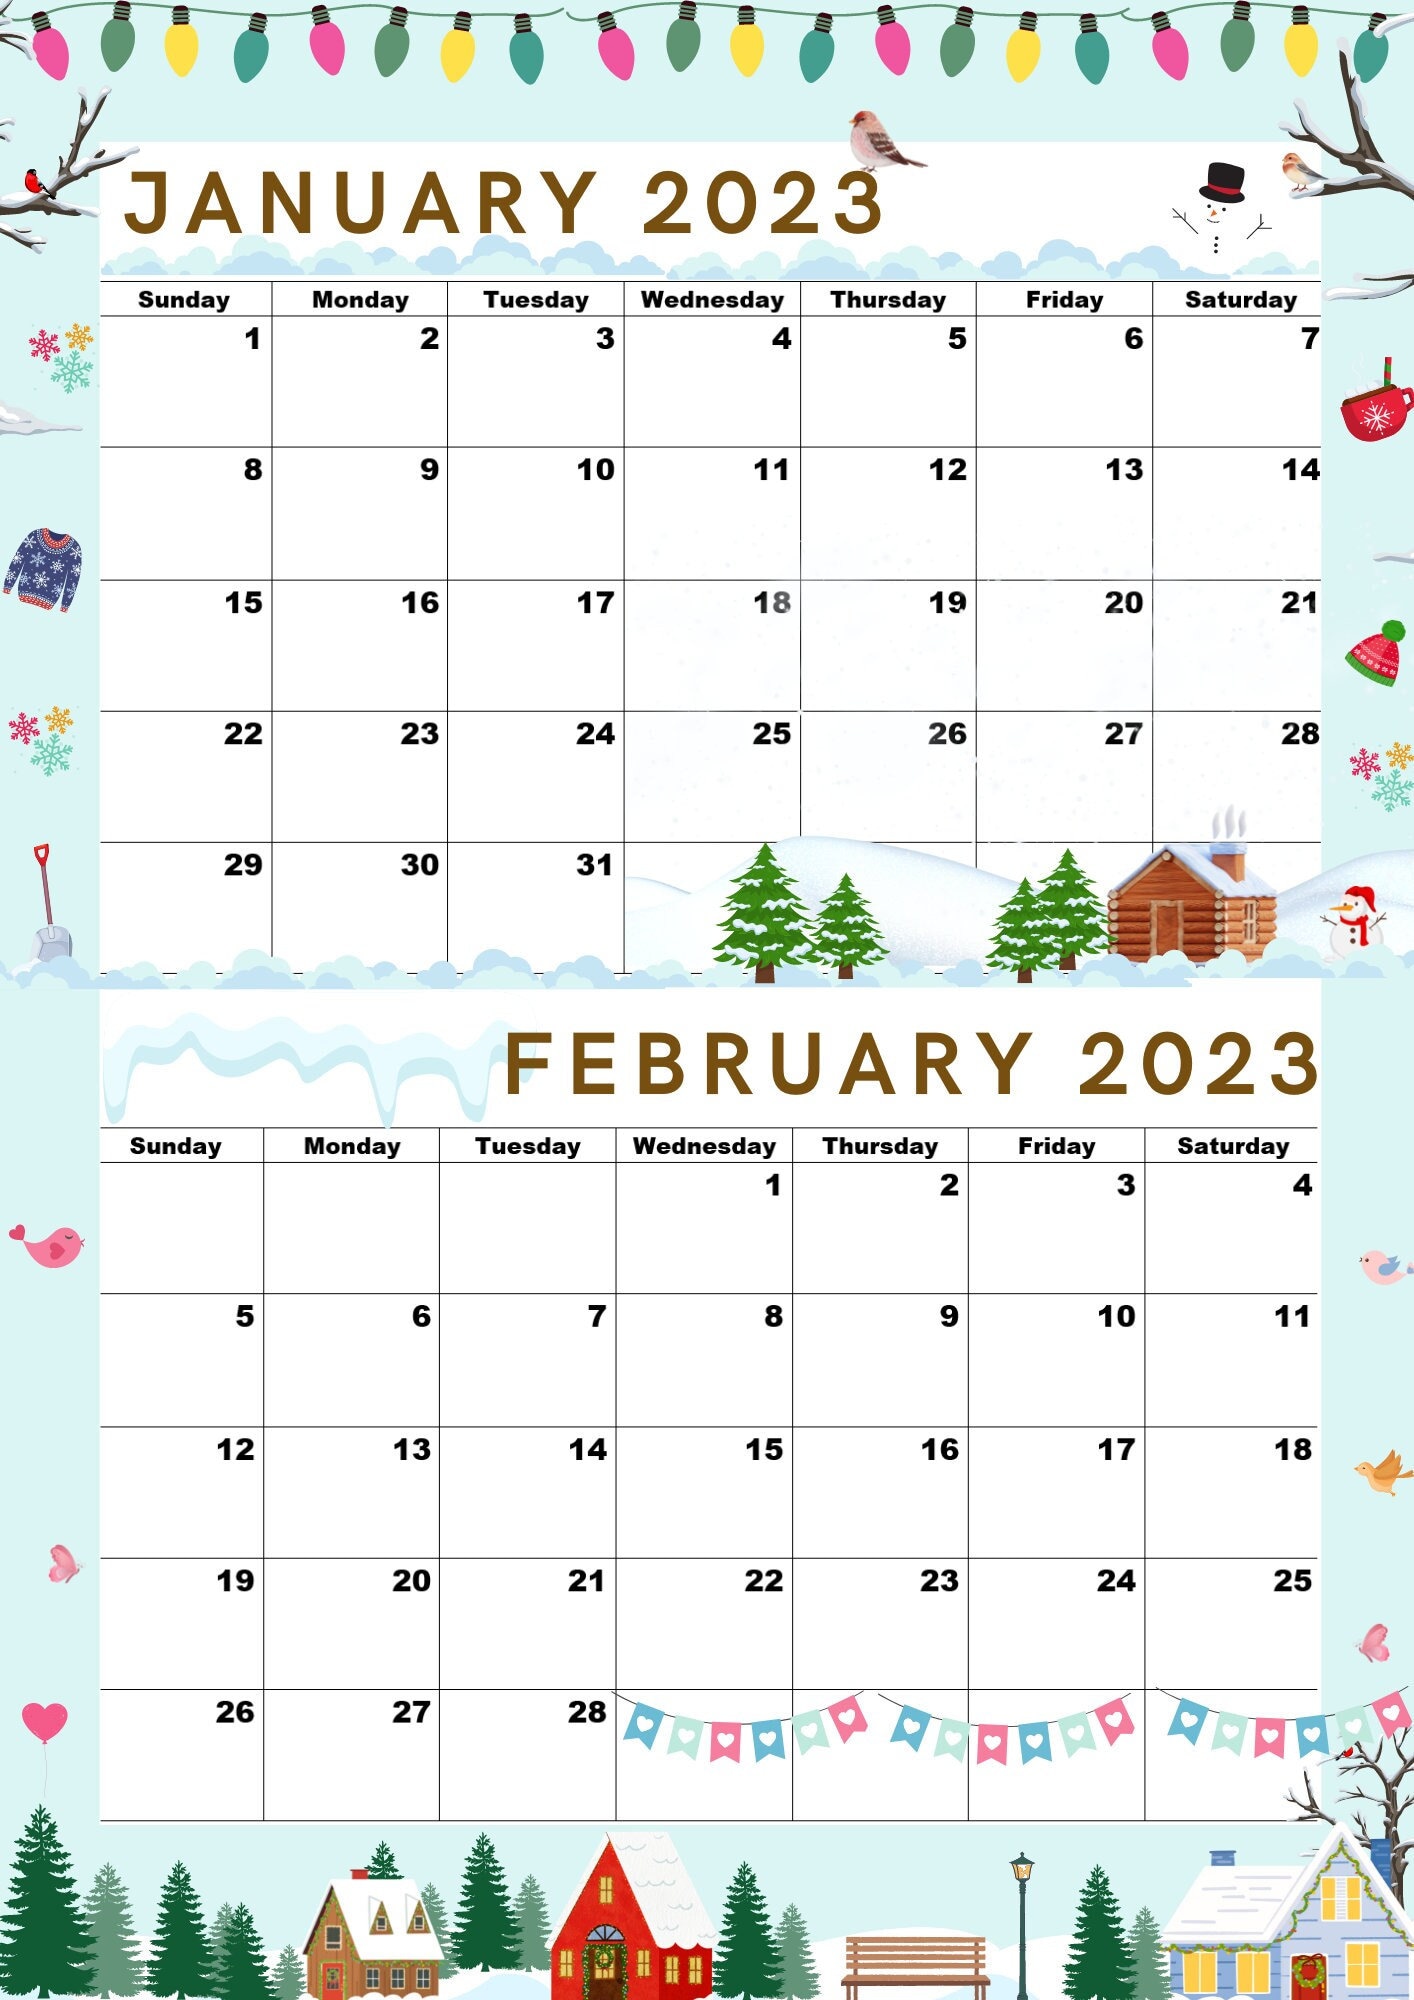 January 2023 Calendar February 2023 Calendar January 2023 - Etsy